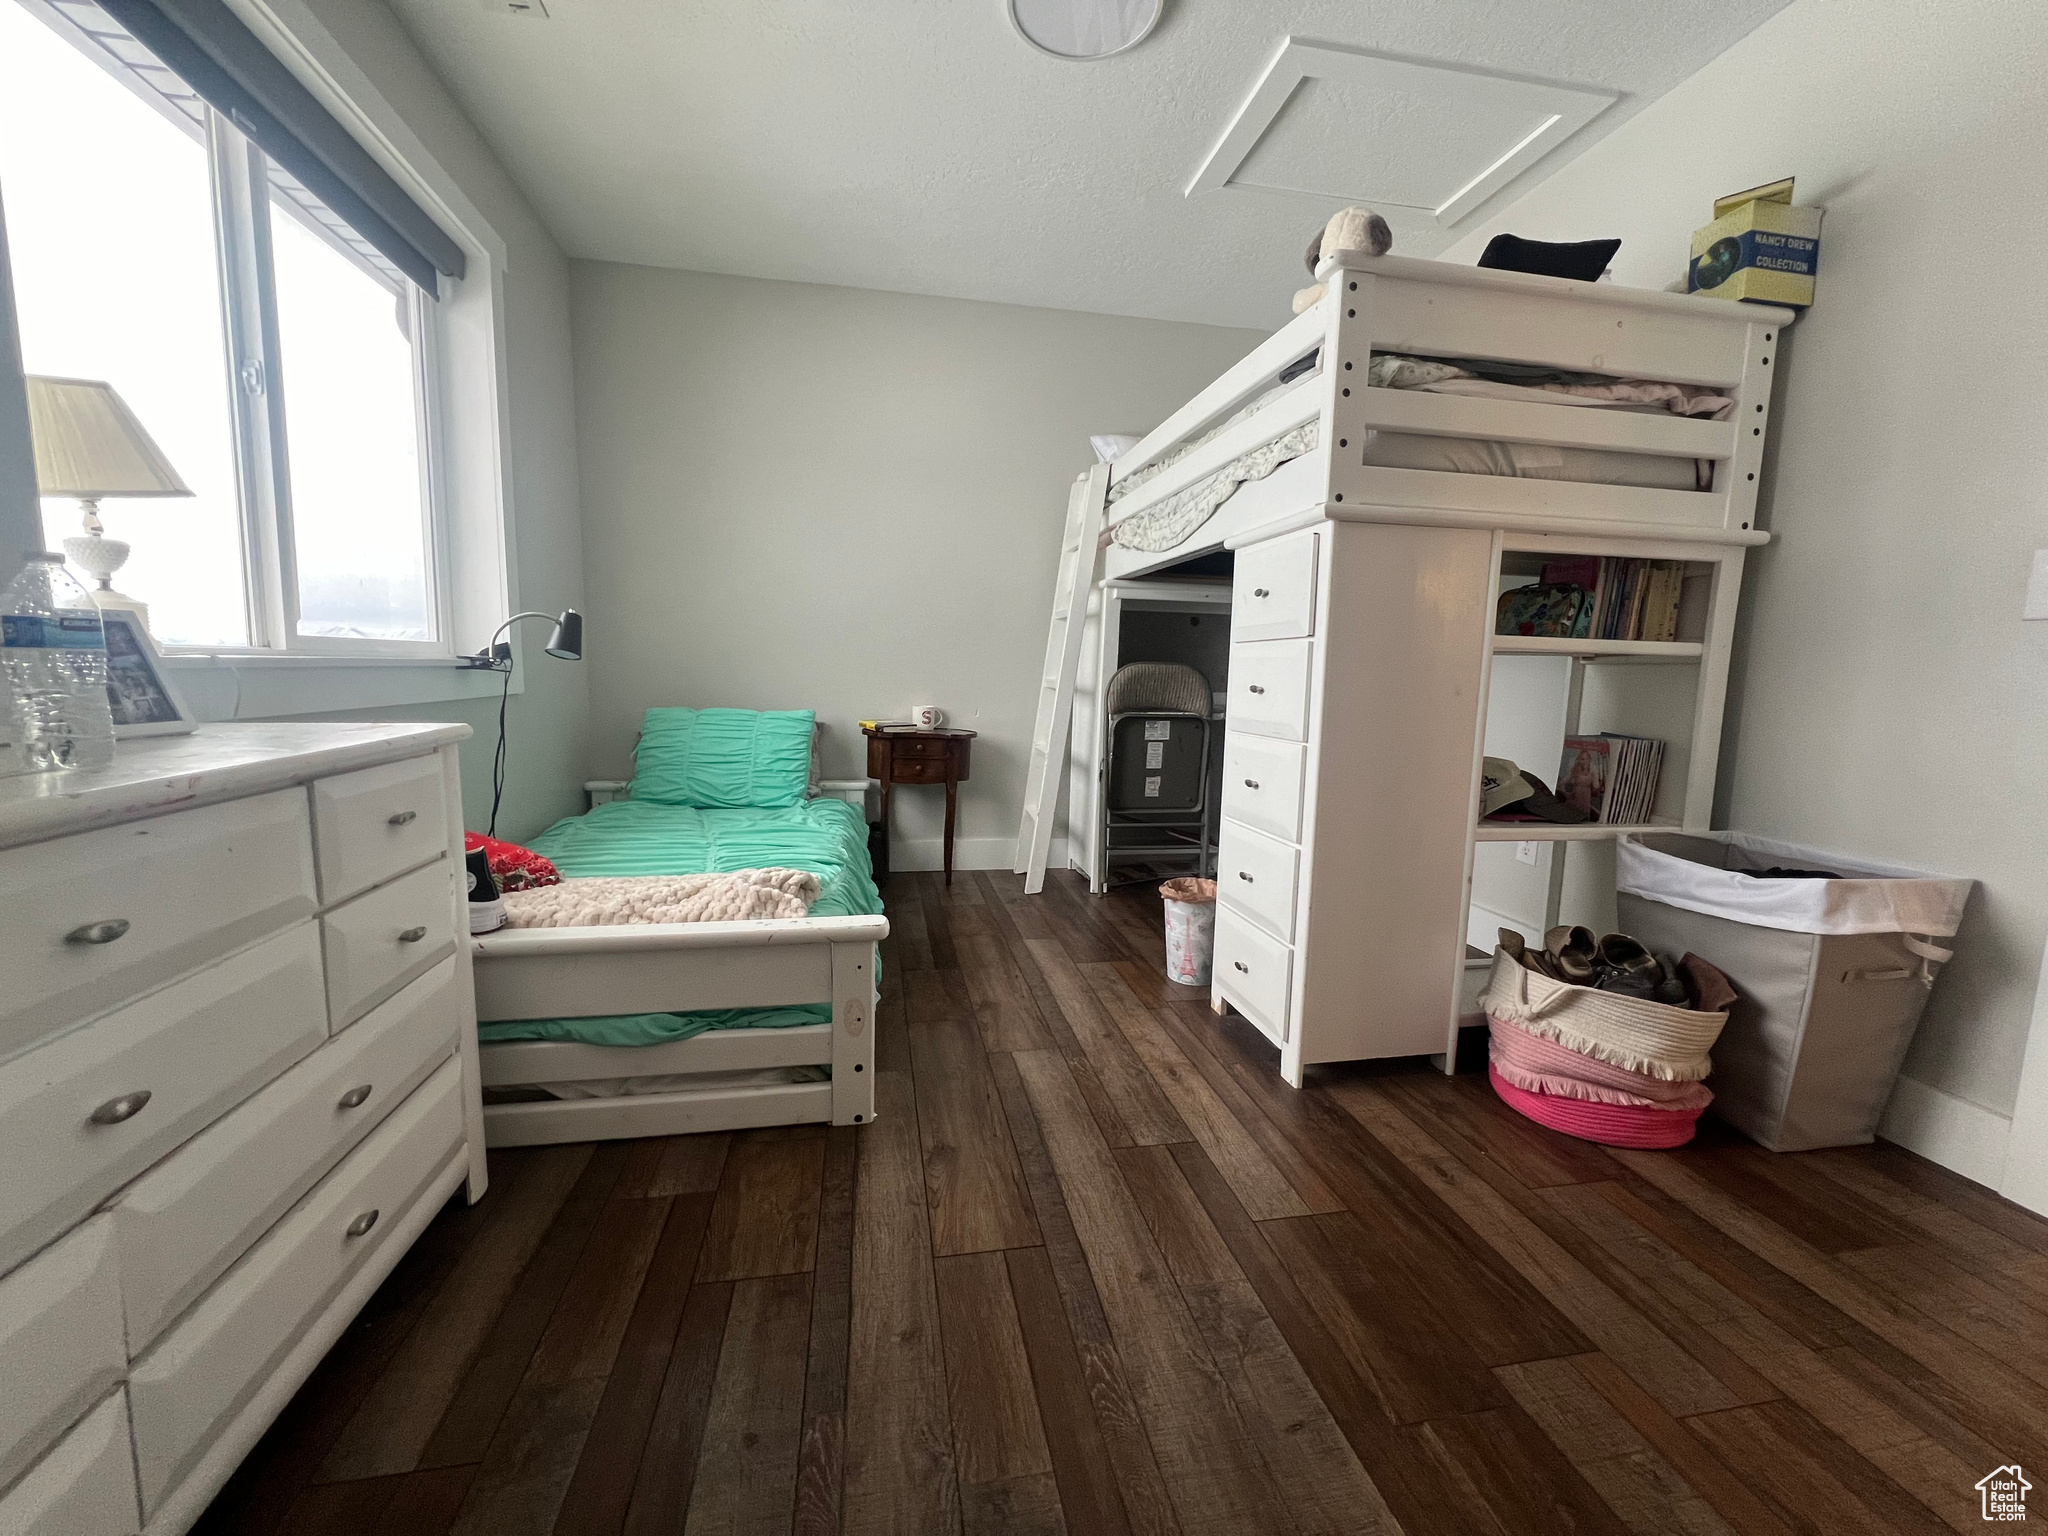 Bedroom featuring dark wood-type flooring